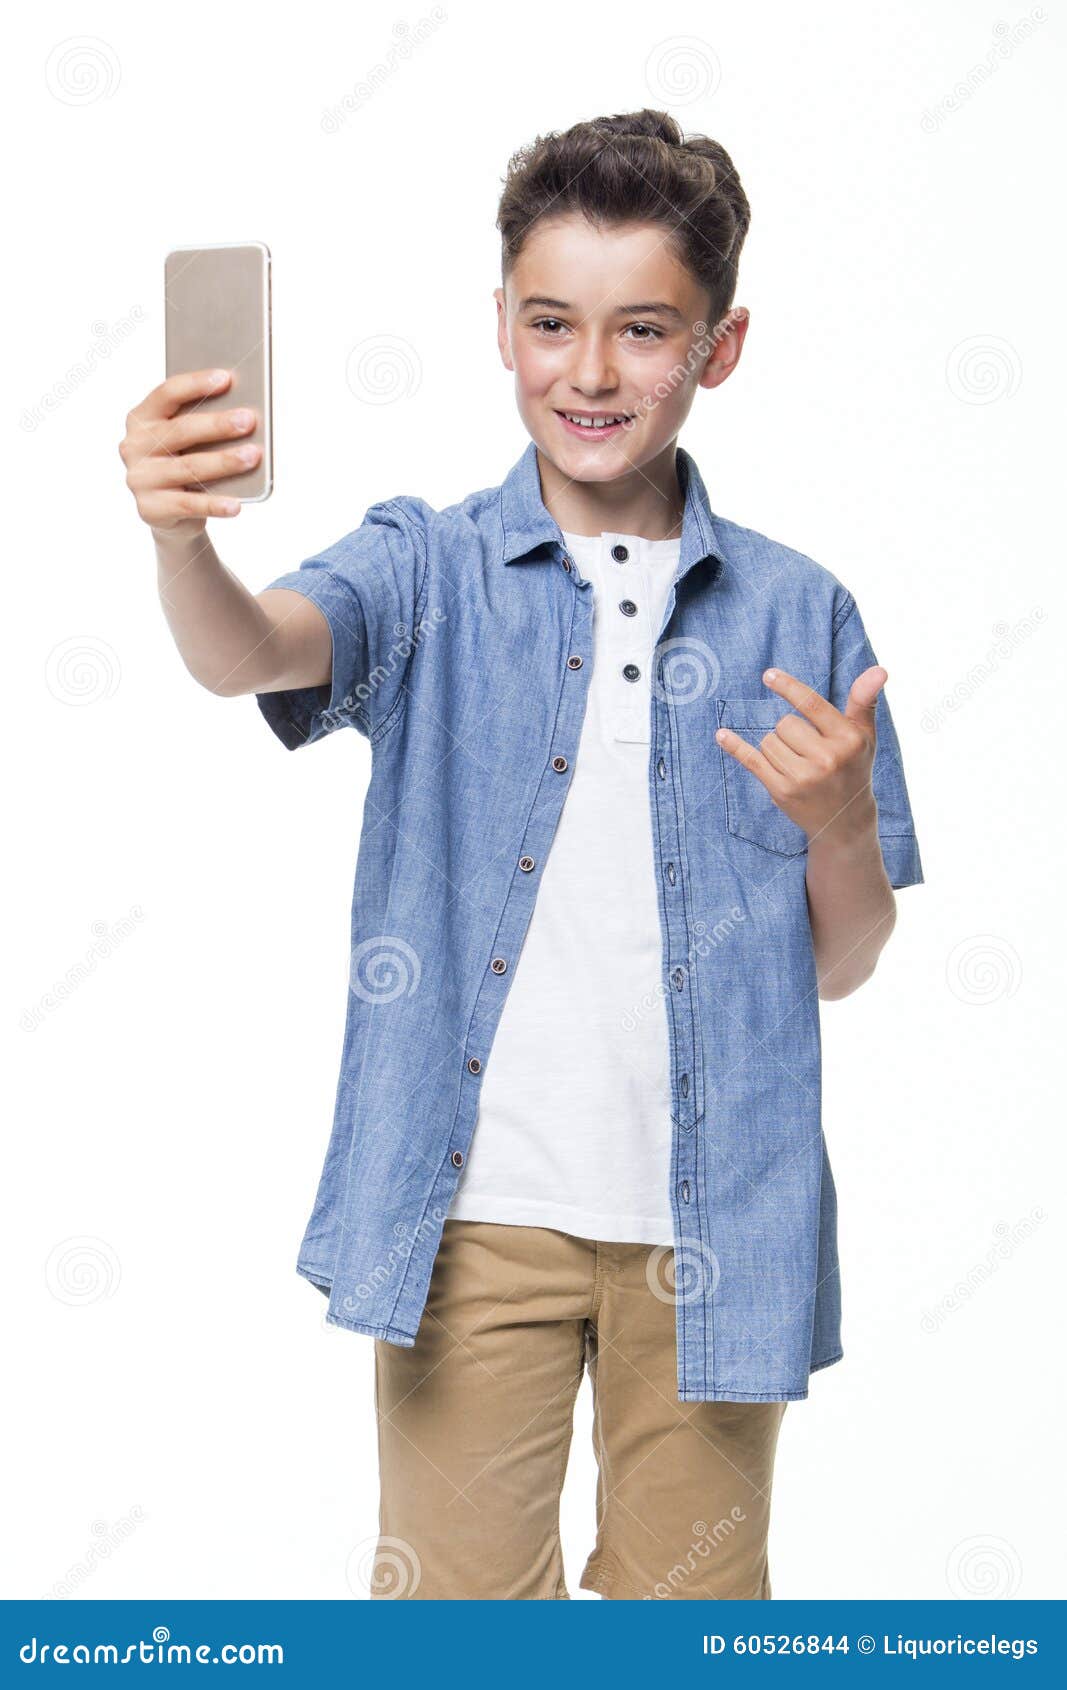 stylish selfie poses for boys || selfie poses || selfie ideas || boys photo  poses.. - YouTube